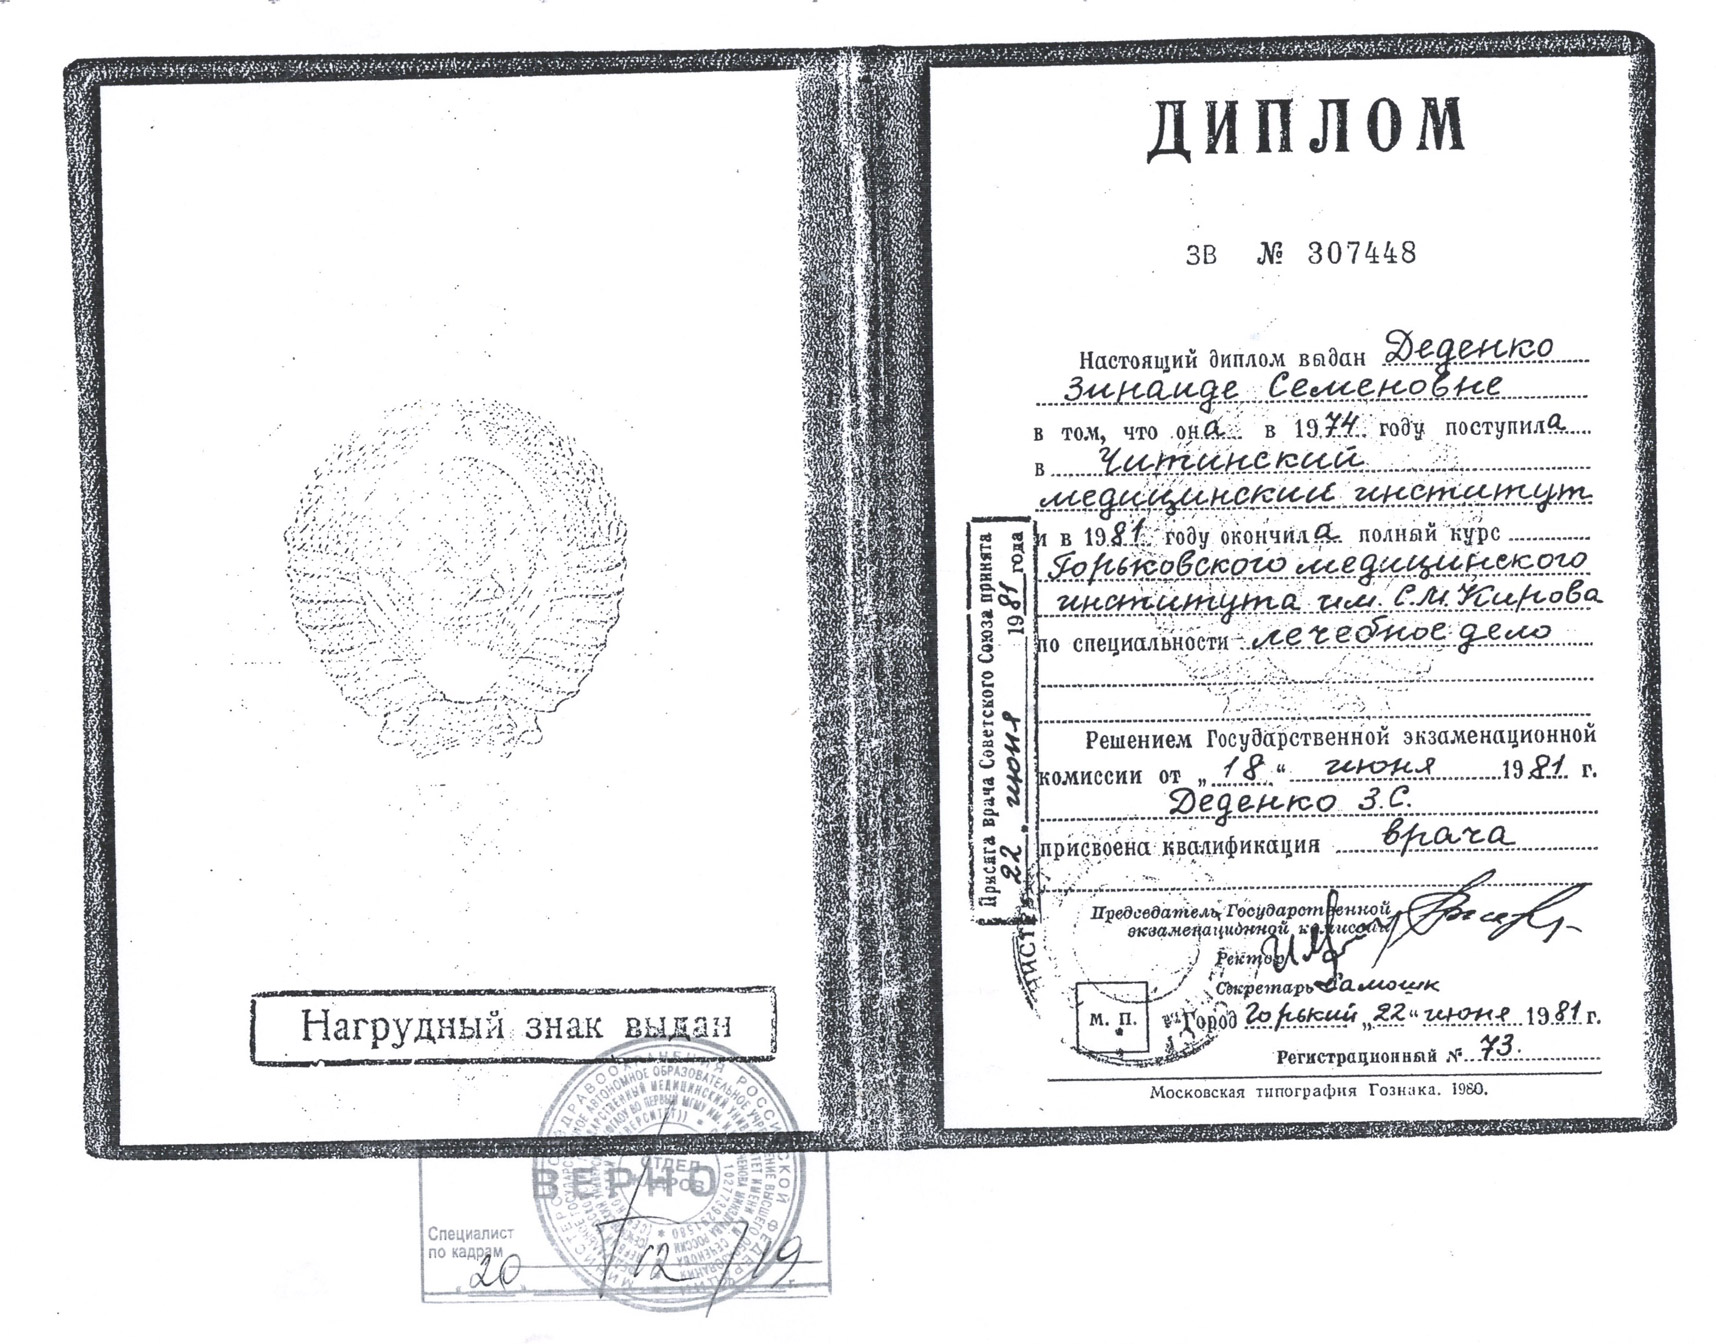 деденко-сертификат-3